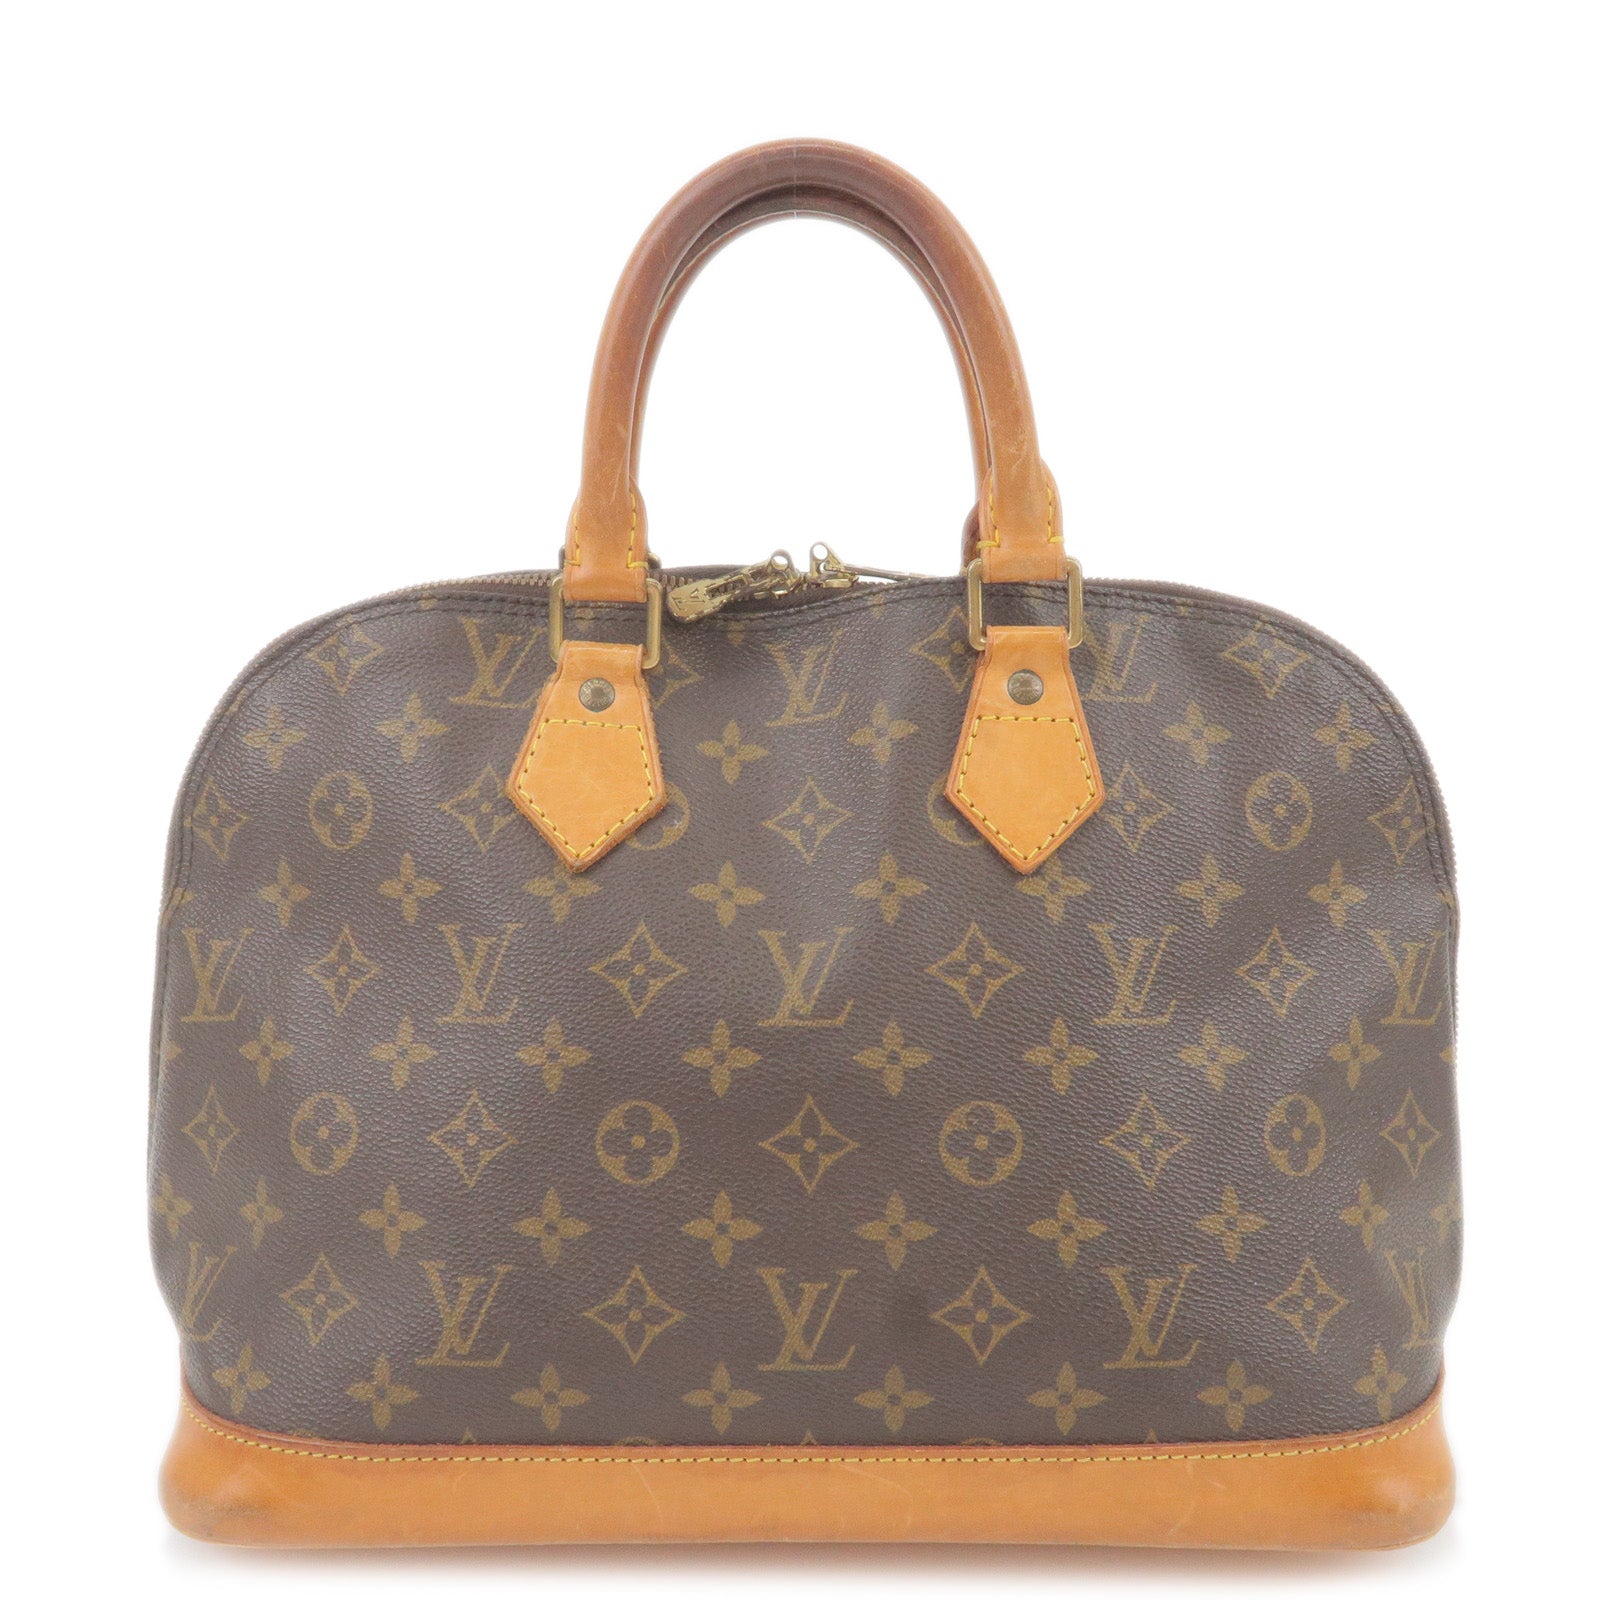 Louis Vuitton Twist MM Bag Review  Luxury Shopping at LV in Paris 